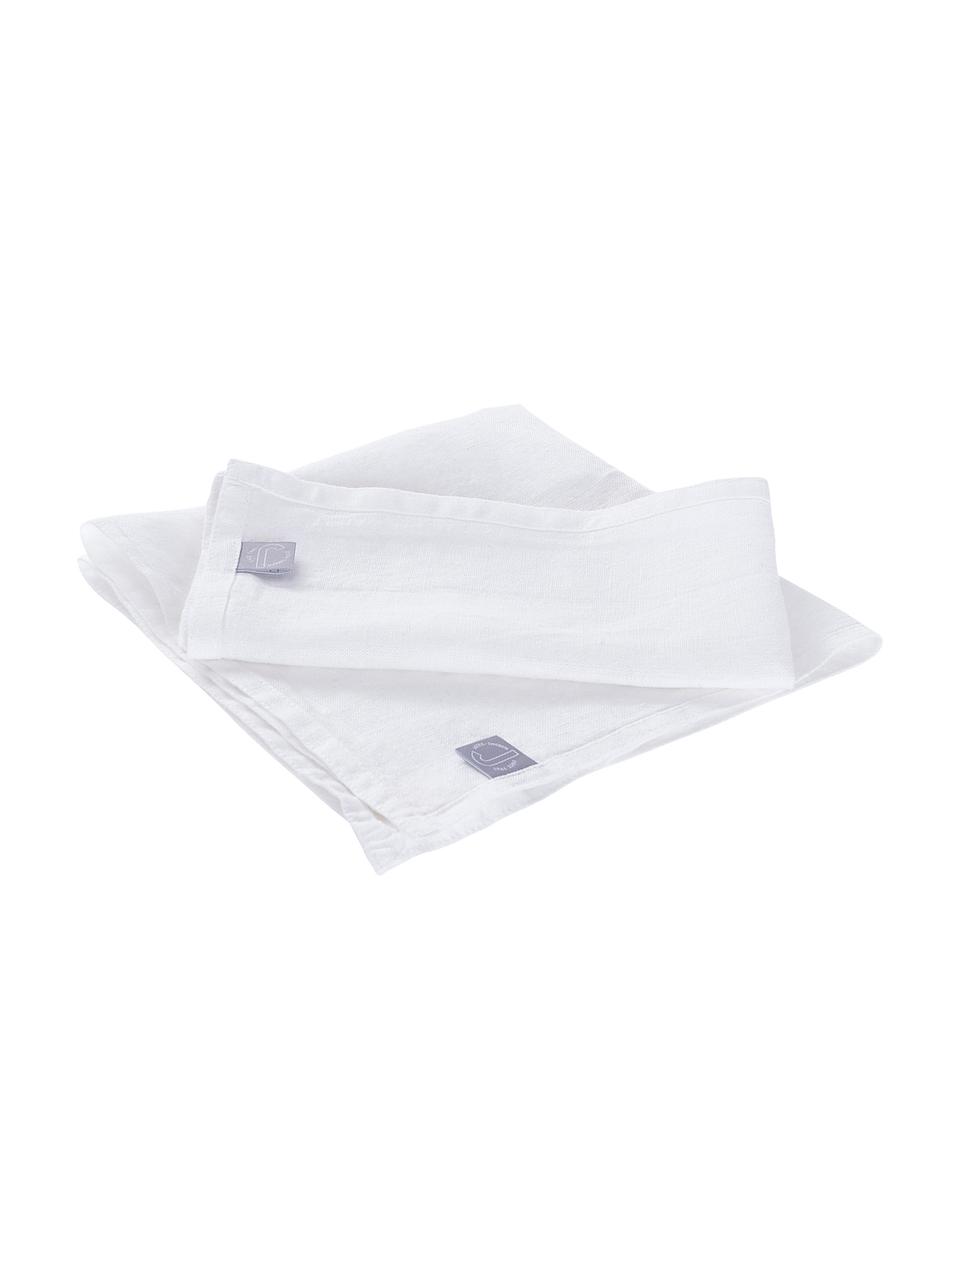 Serviettes de table pur lin Hedda, 2 pièces, Blanc